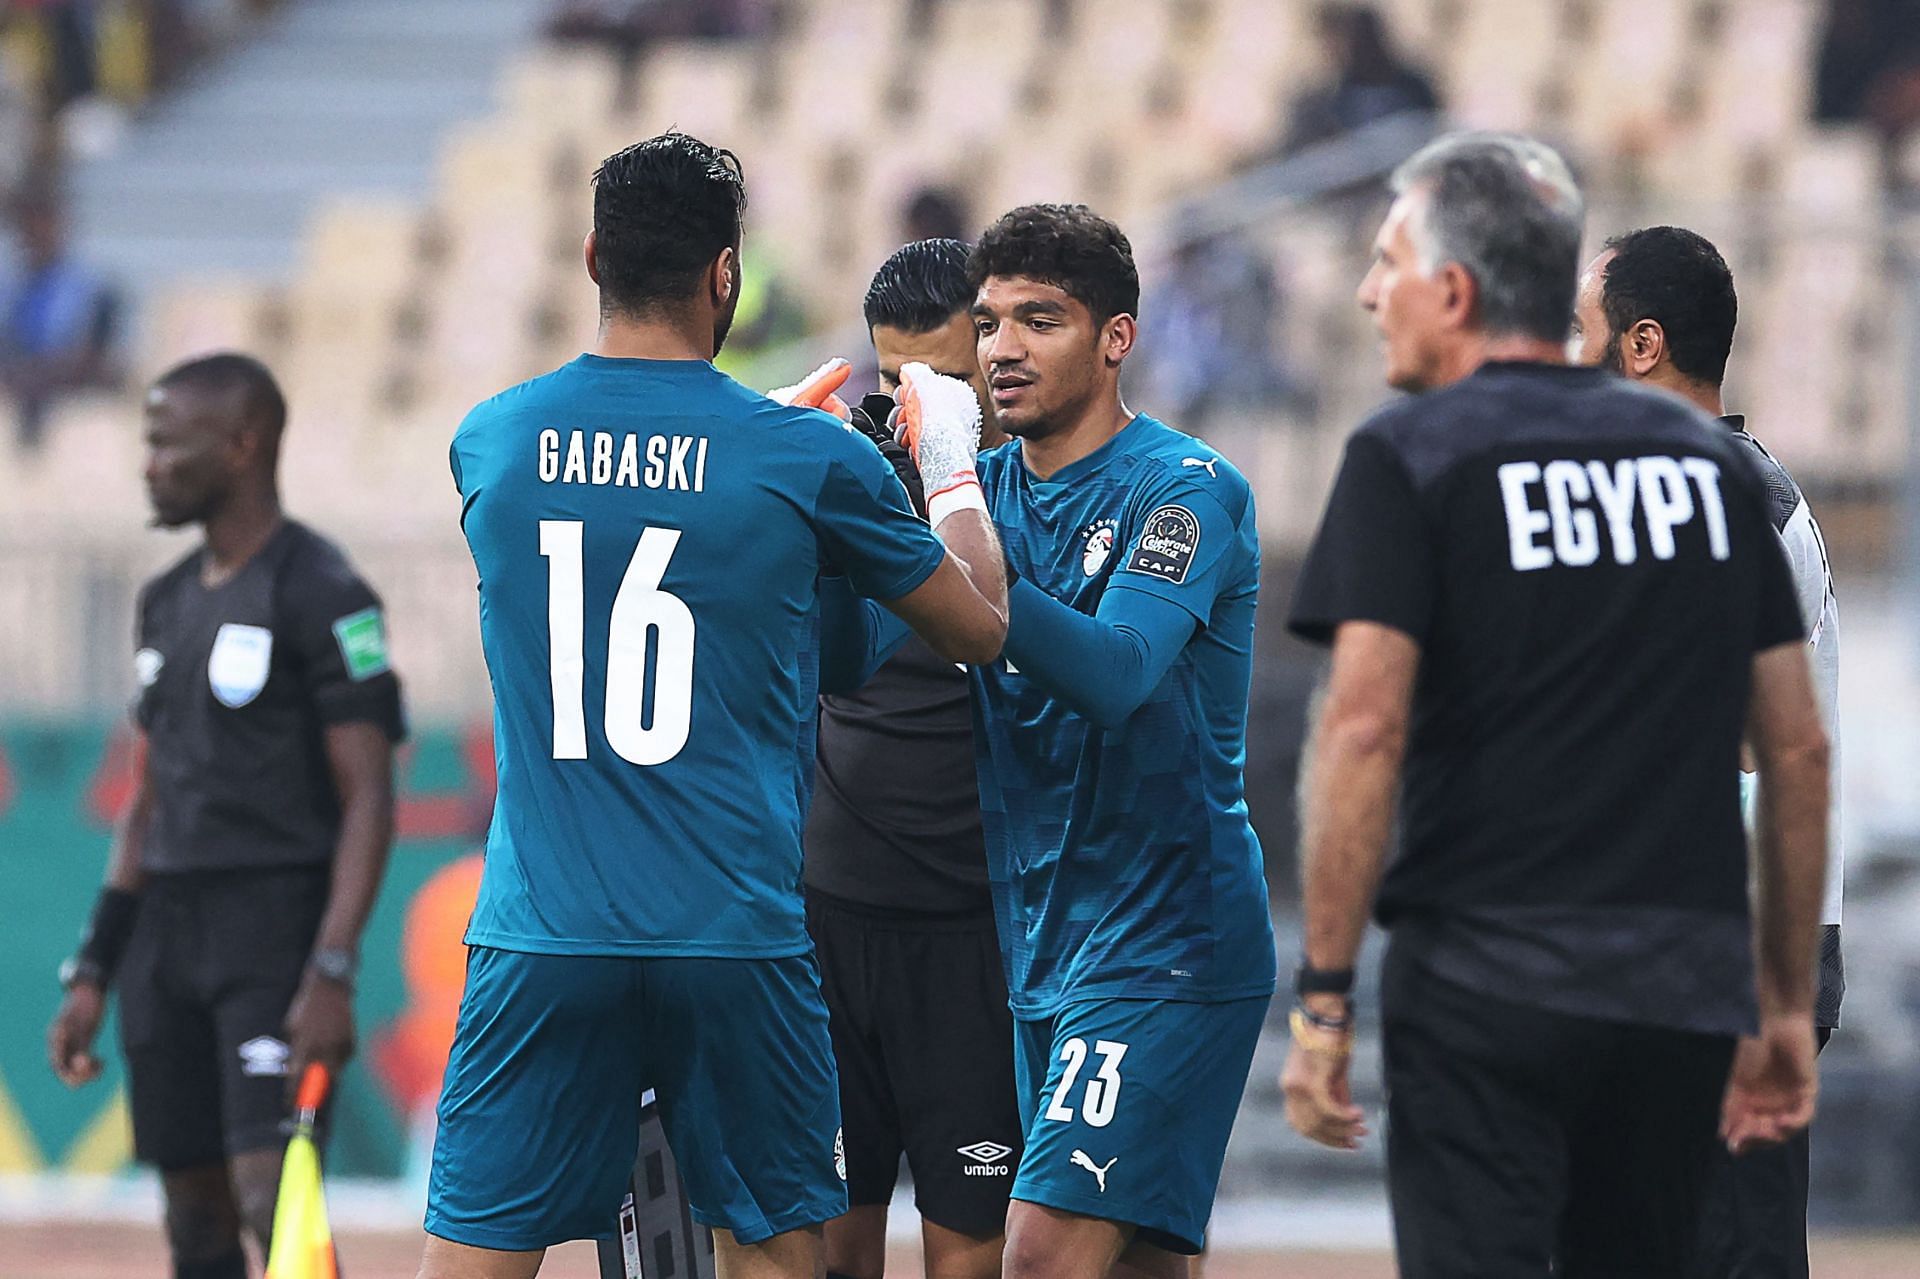 Egypt won on penalties thanks to two saves from Gabaski